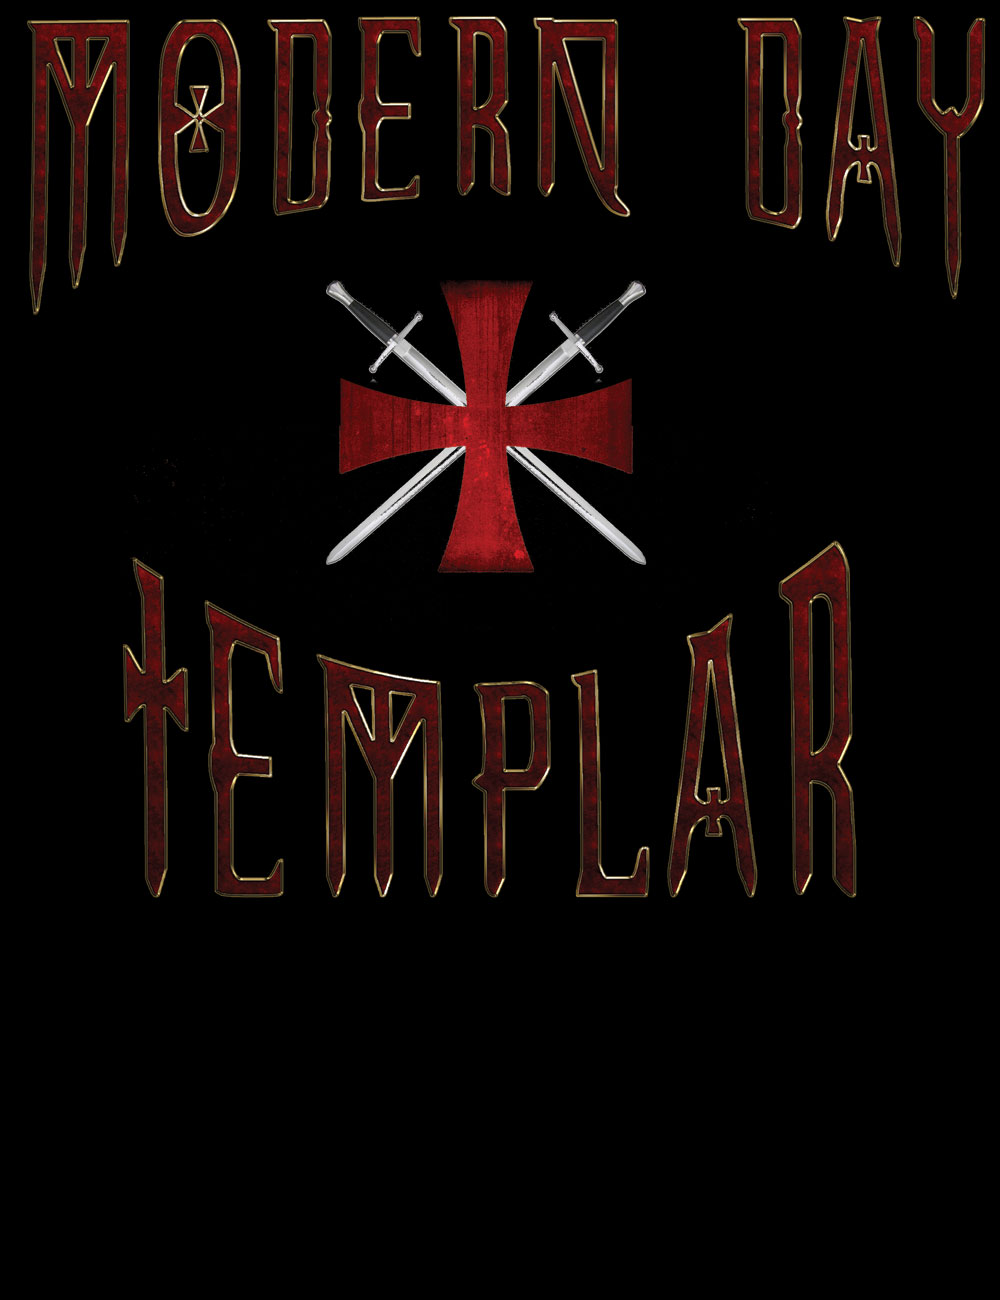 Modern Day Templar T-Shirt - Hellwood Outfitters